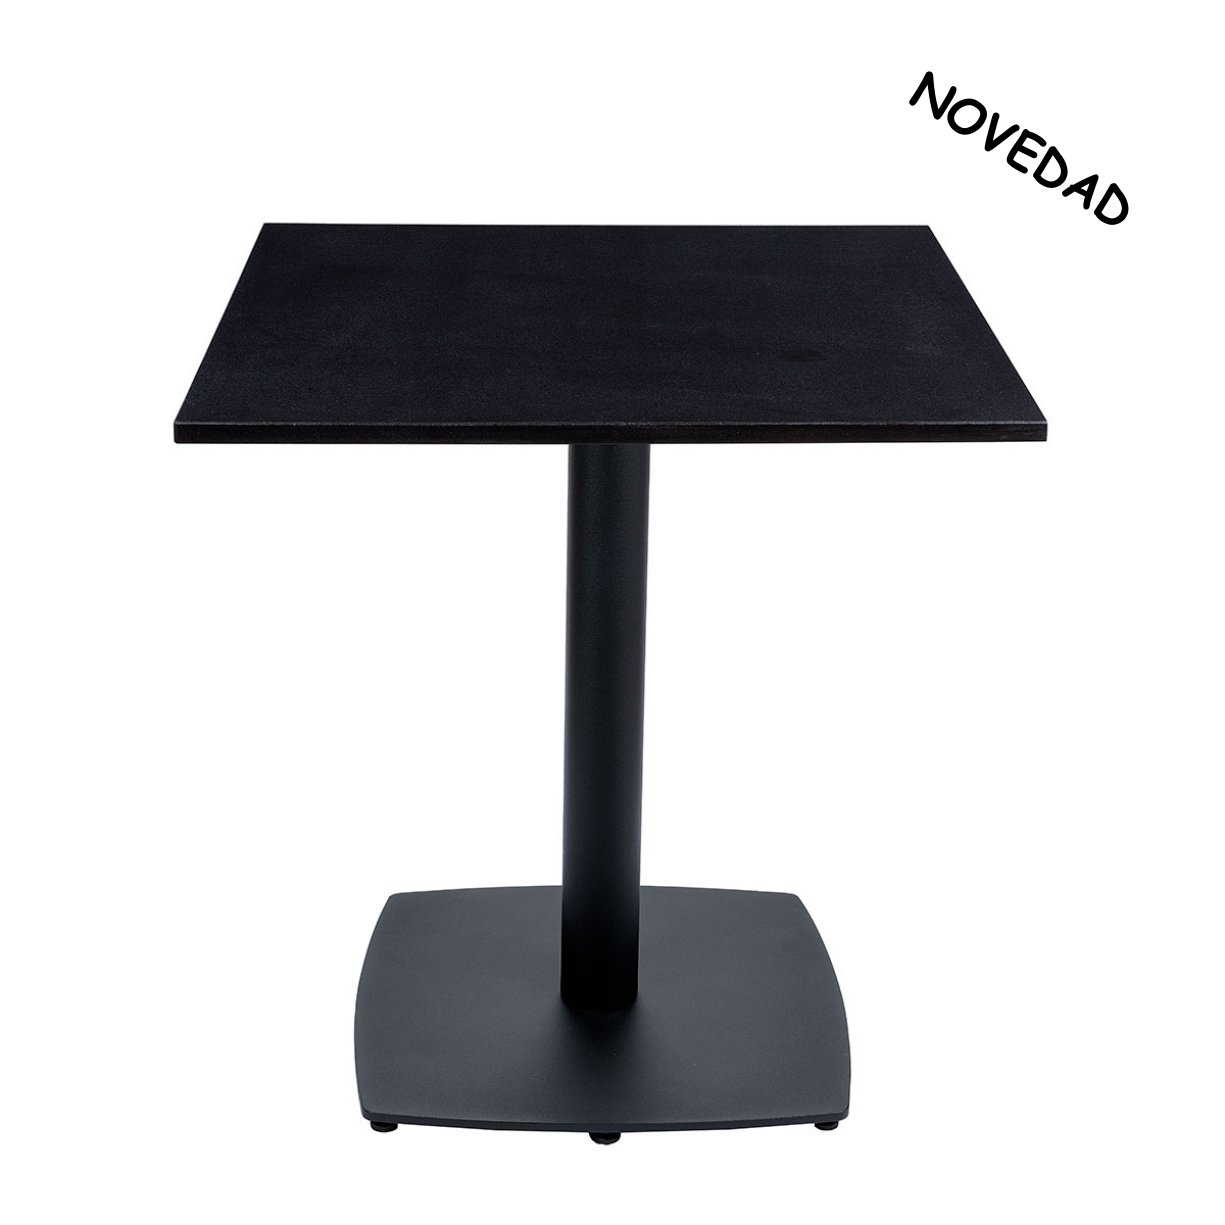 HANOVER-mesa-negra-tablero-cuadrado-piedra-negra_N